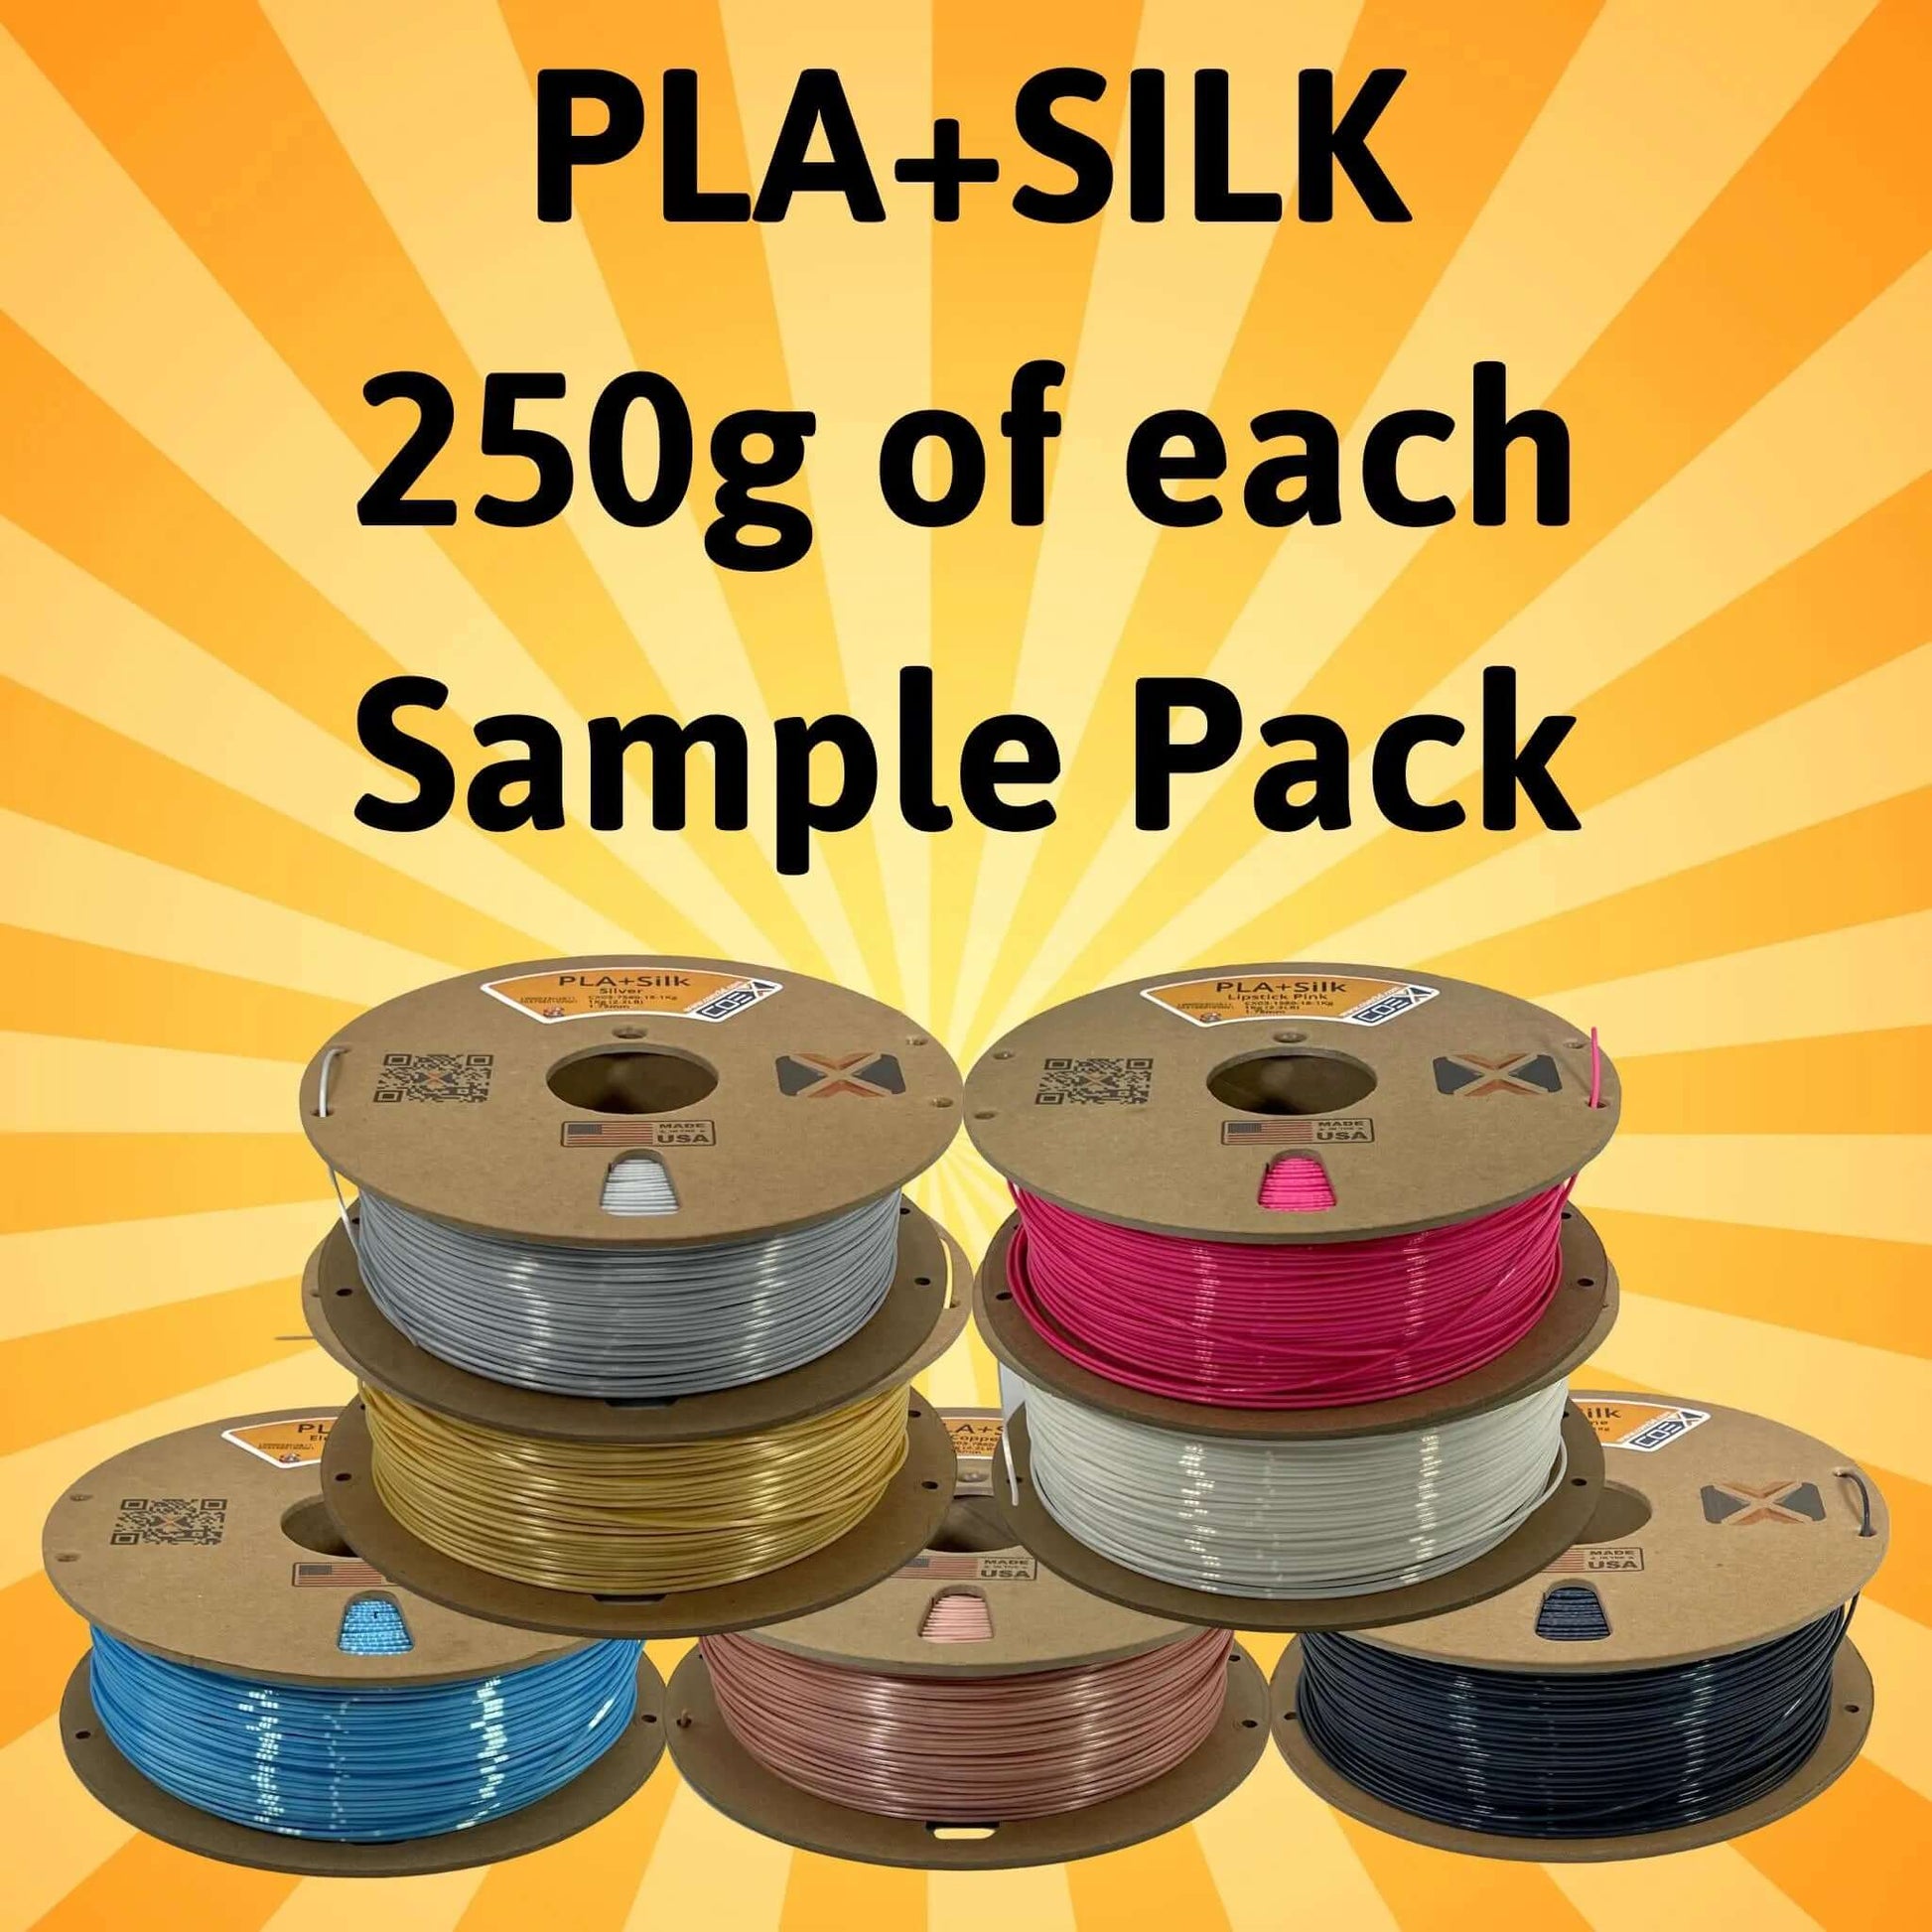 PLA+SILK Sample Pack COEX 3D